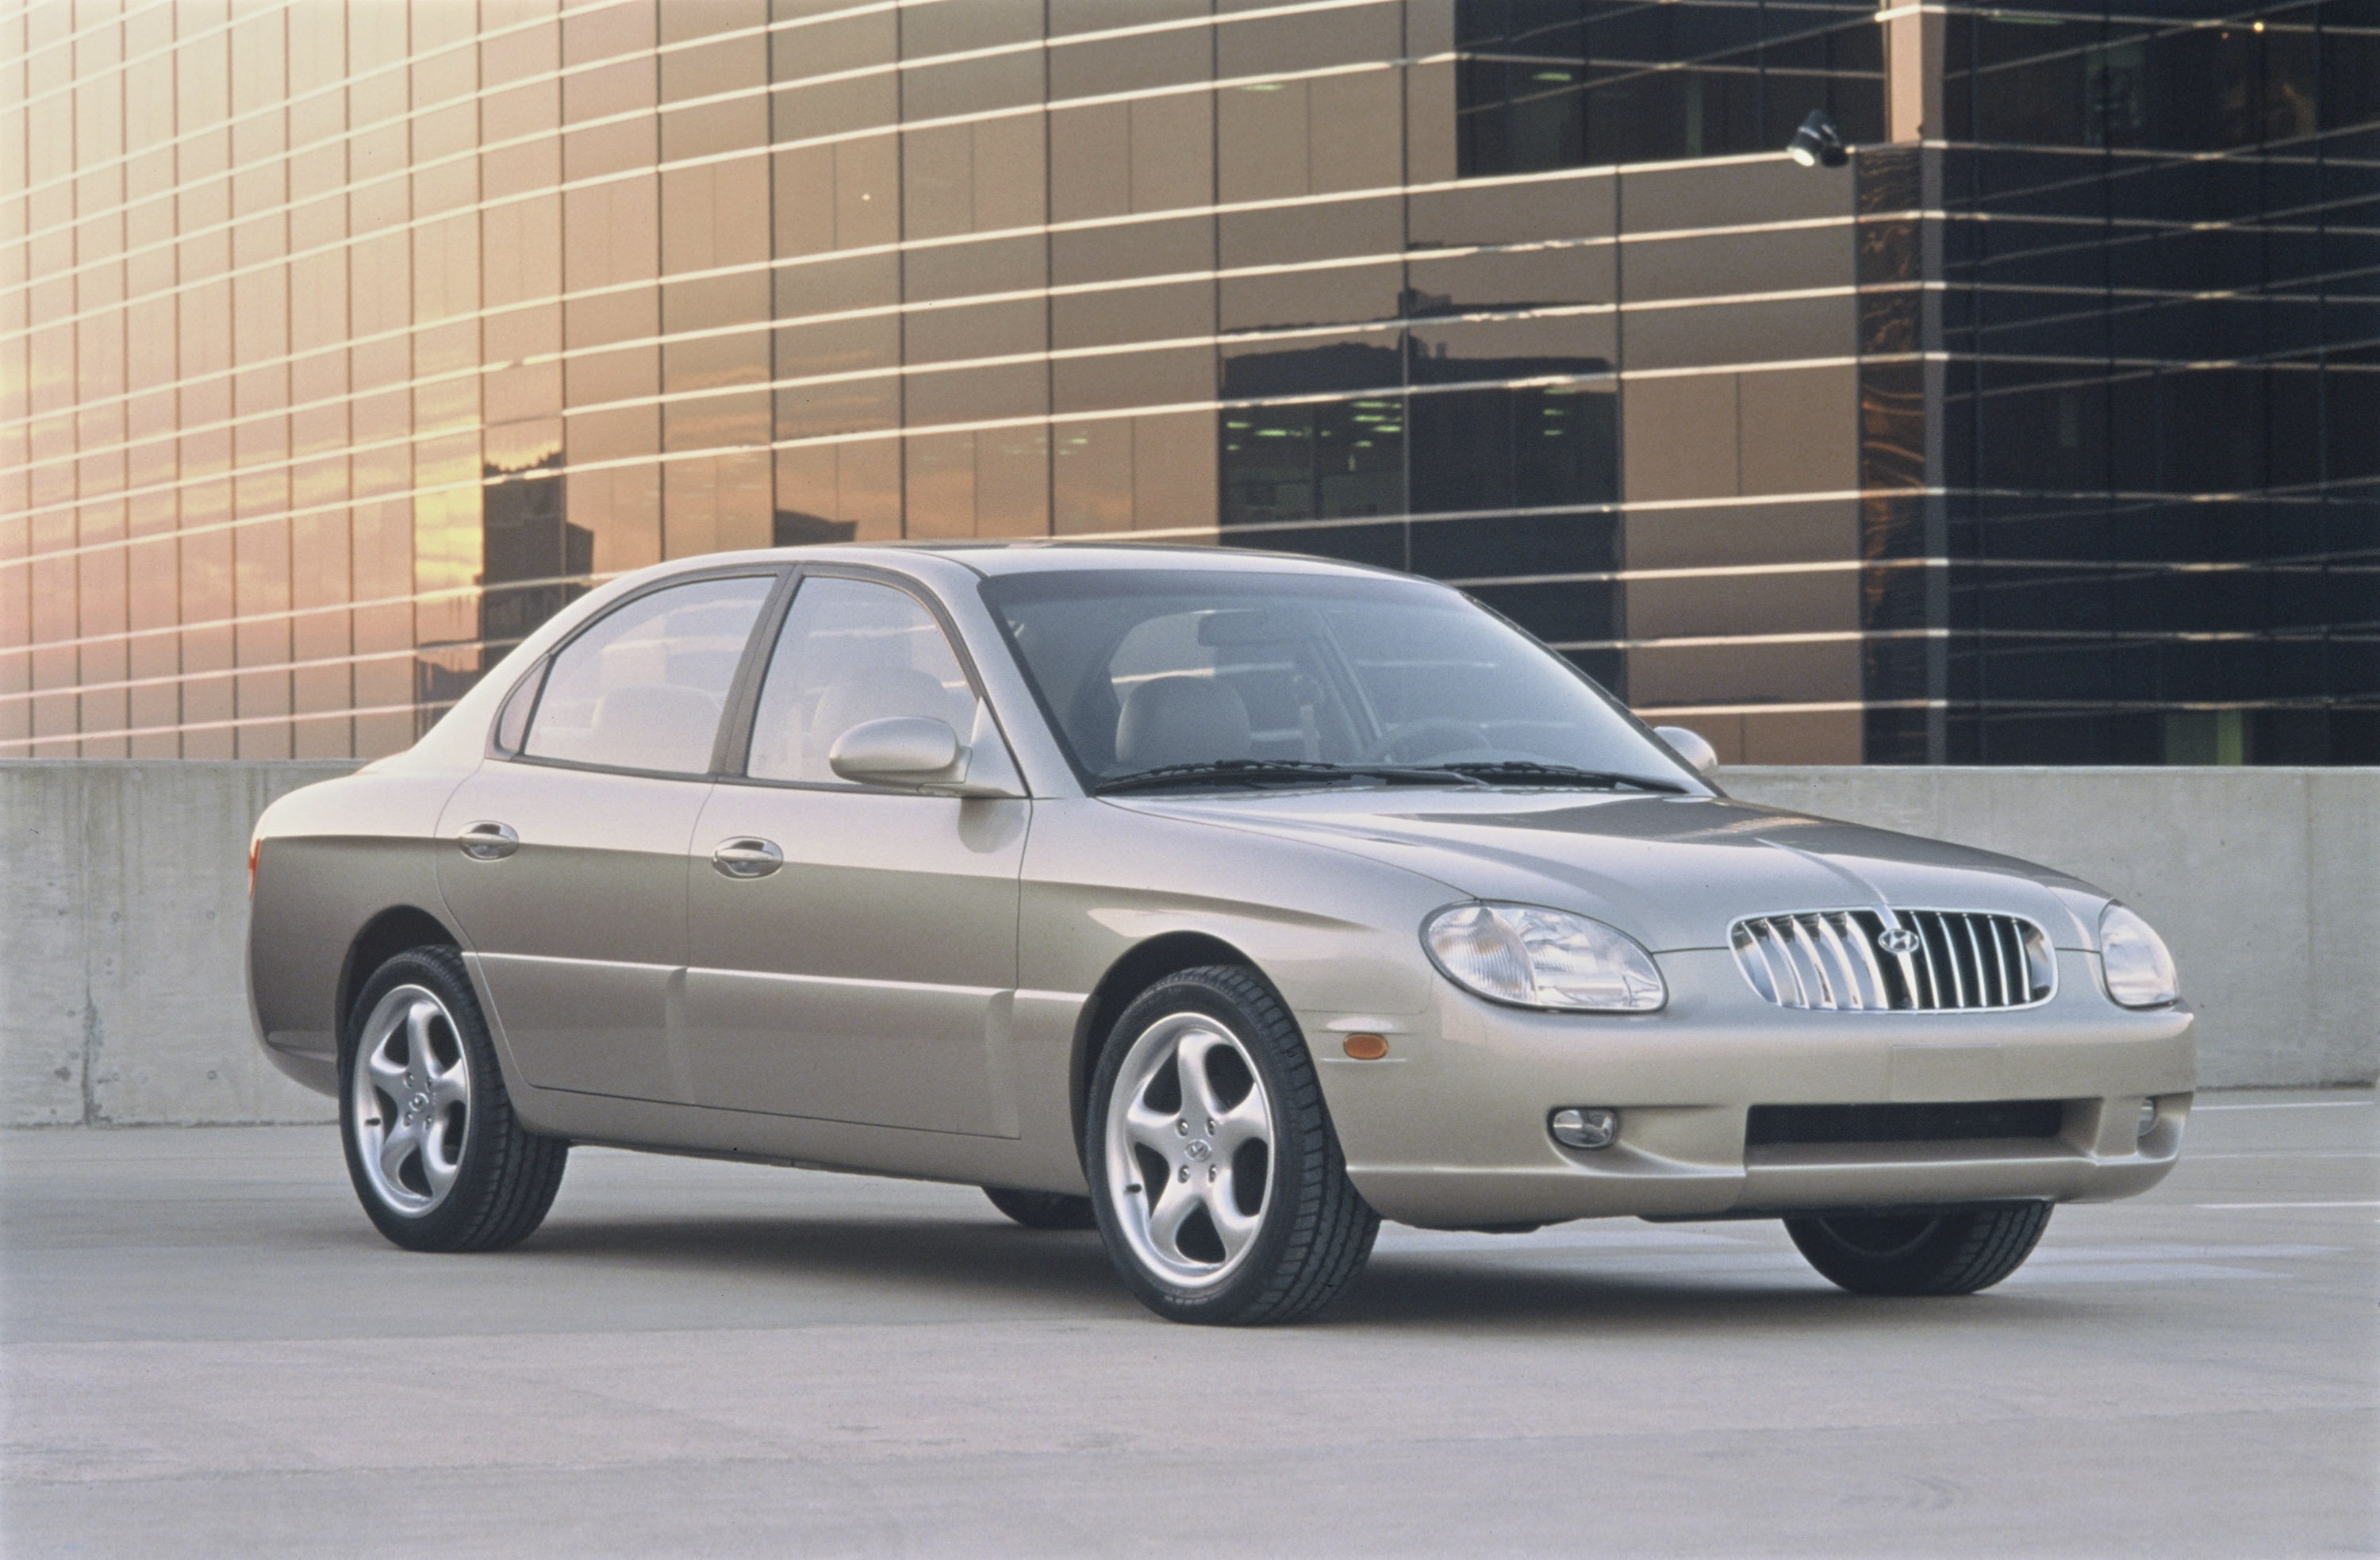 Hyundai Avatar Concept, 1998